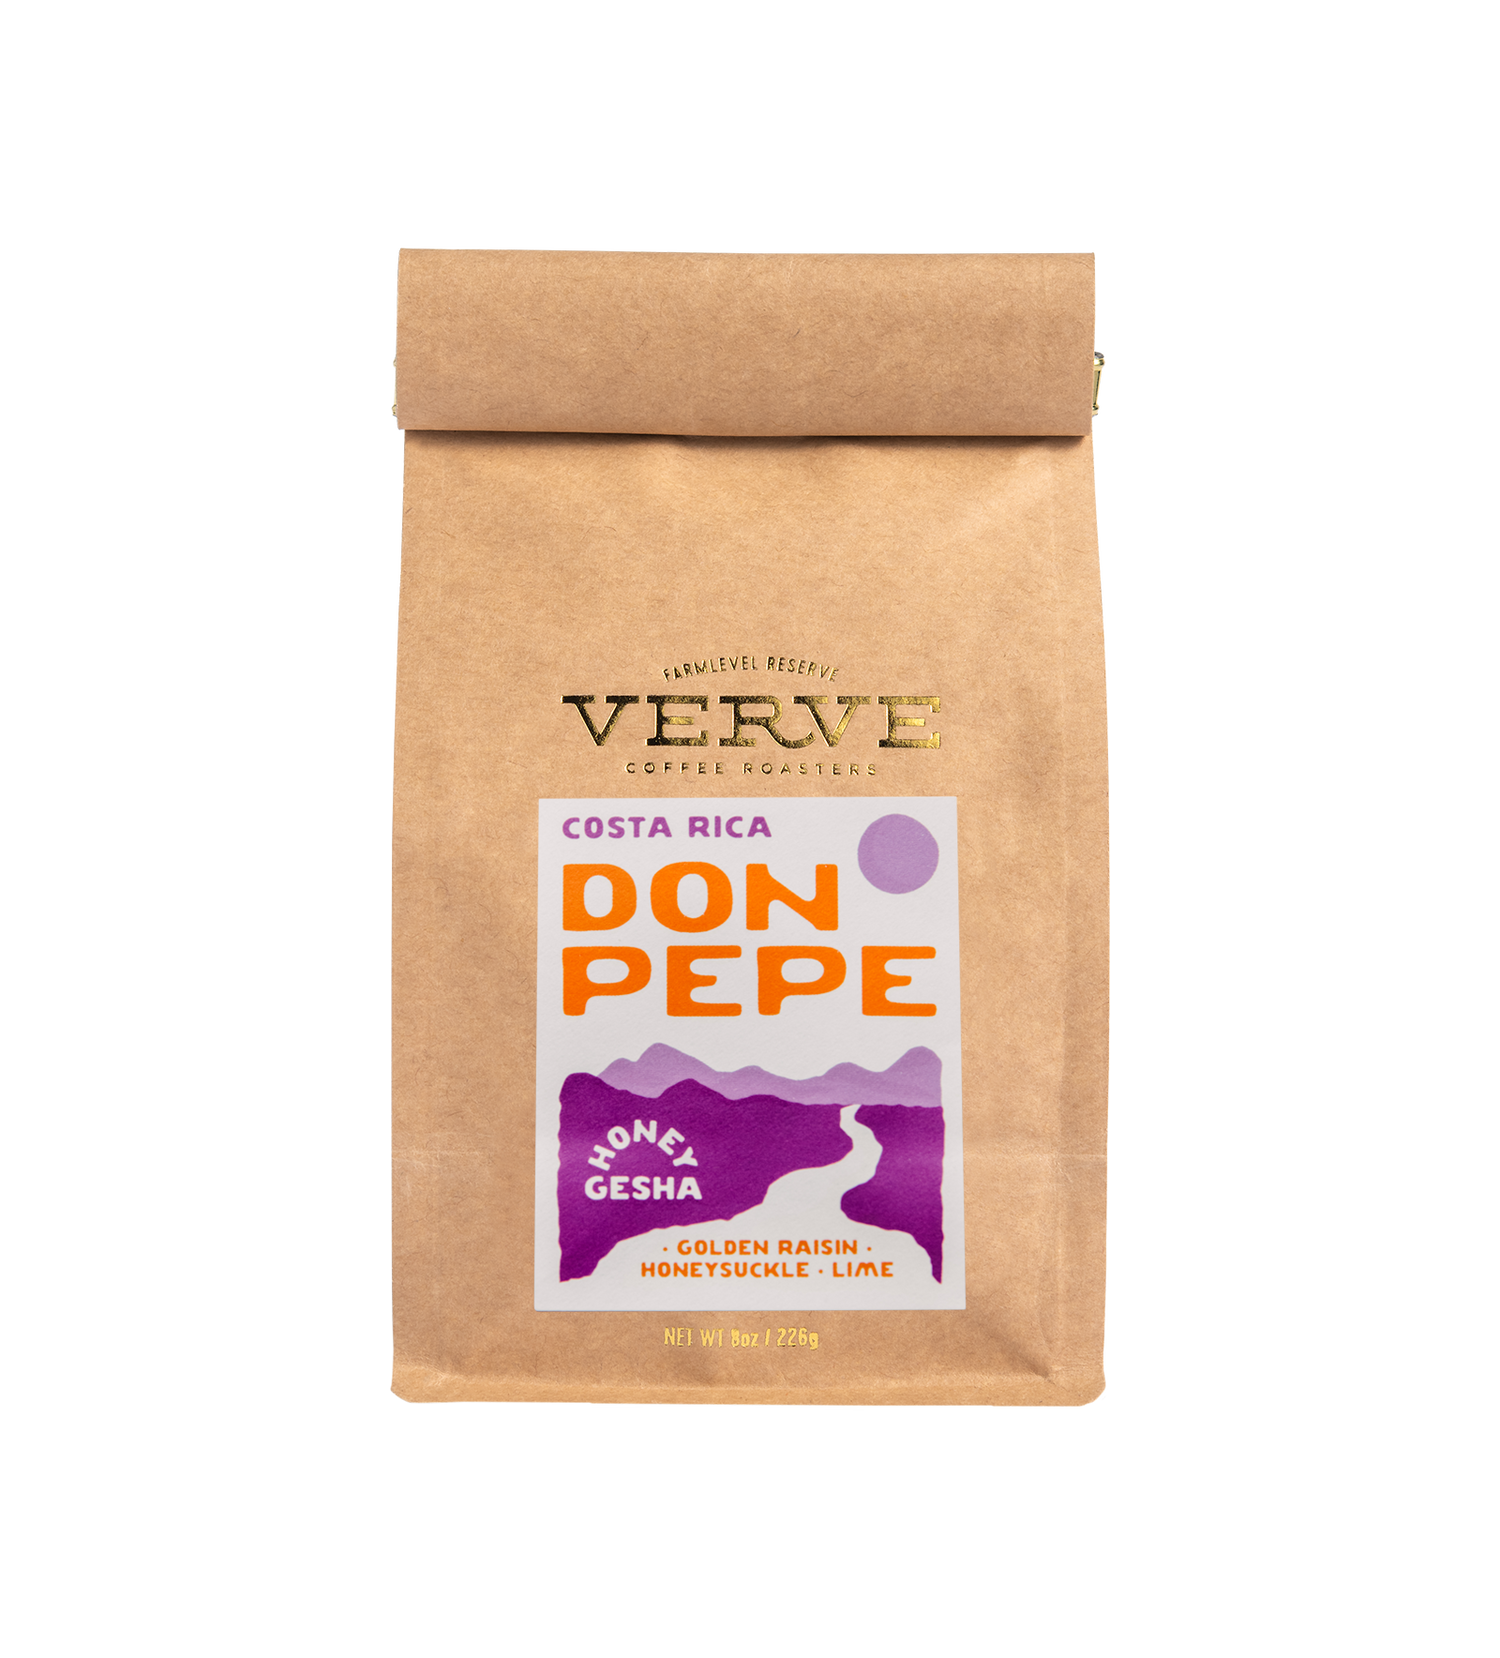 Don Pepe 8oz Whole Bean